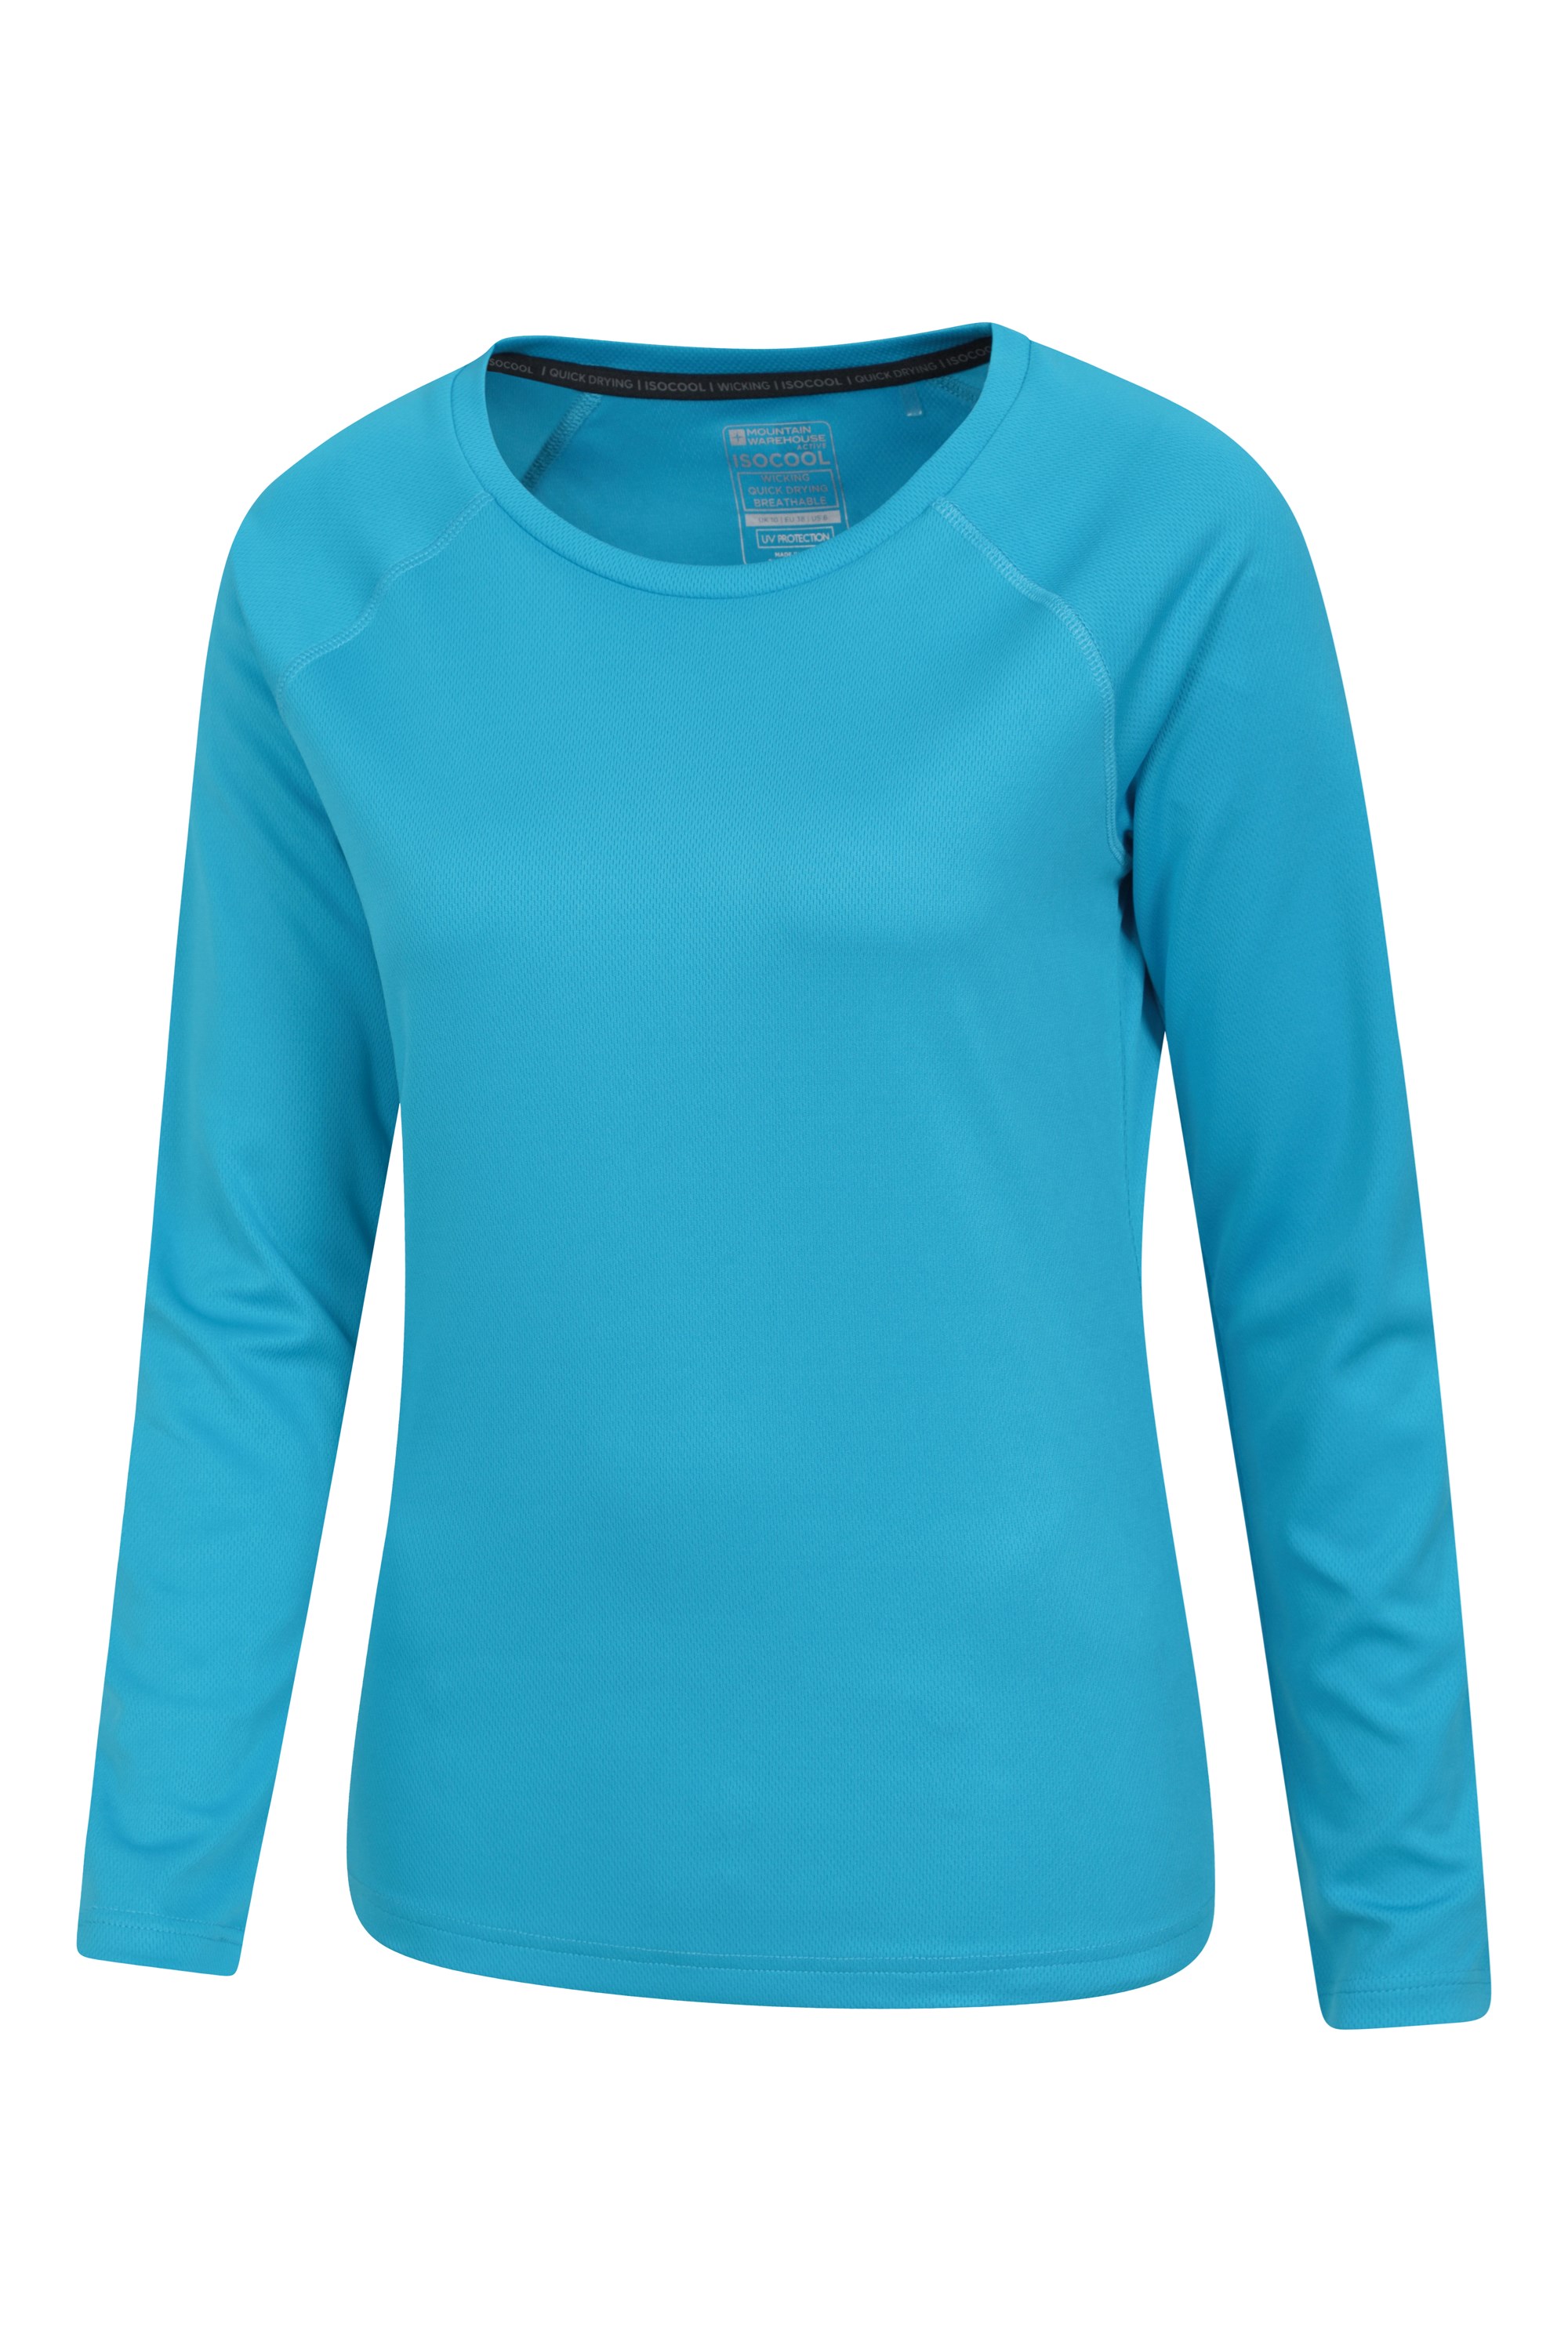 Everlast Women's Seamless Athletic Shirt Long Sleeve Faraway Blue Size LARGE